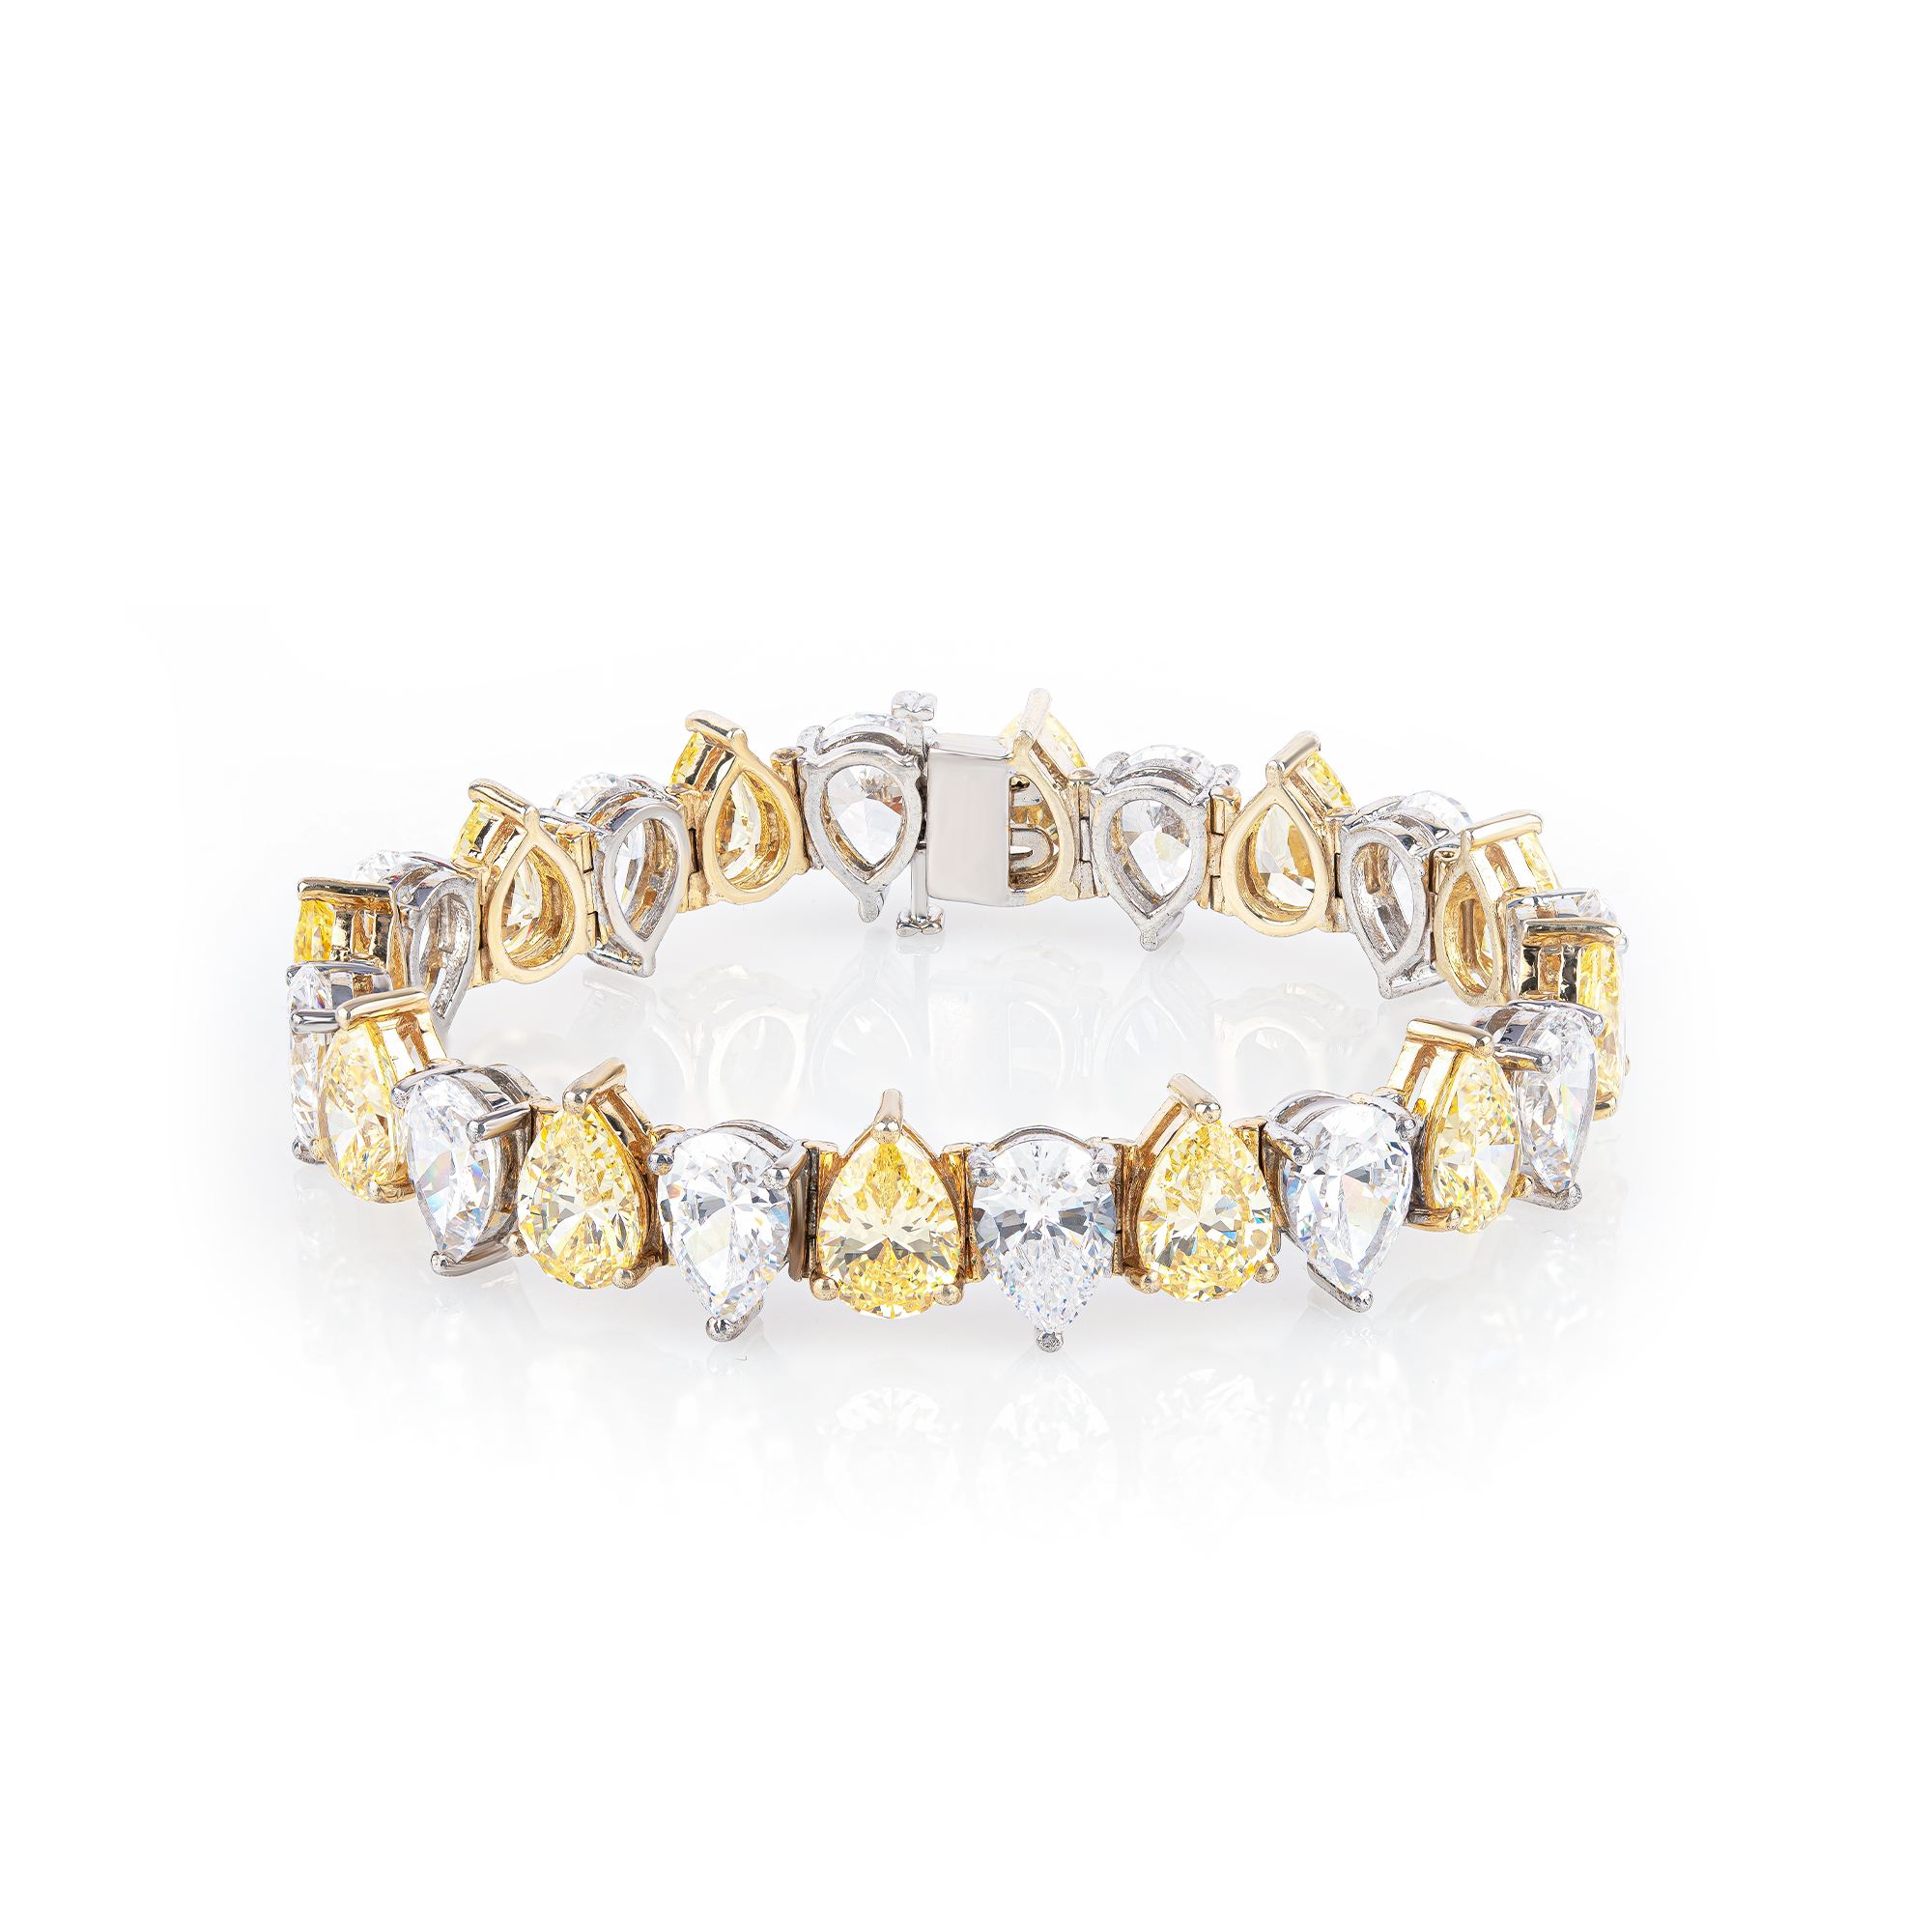 enchanting pears bracelet